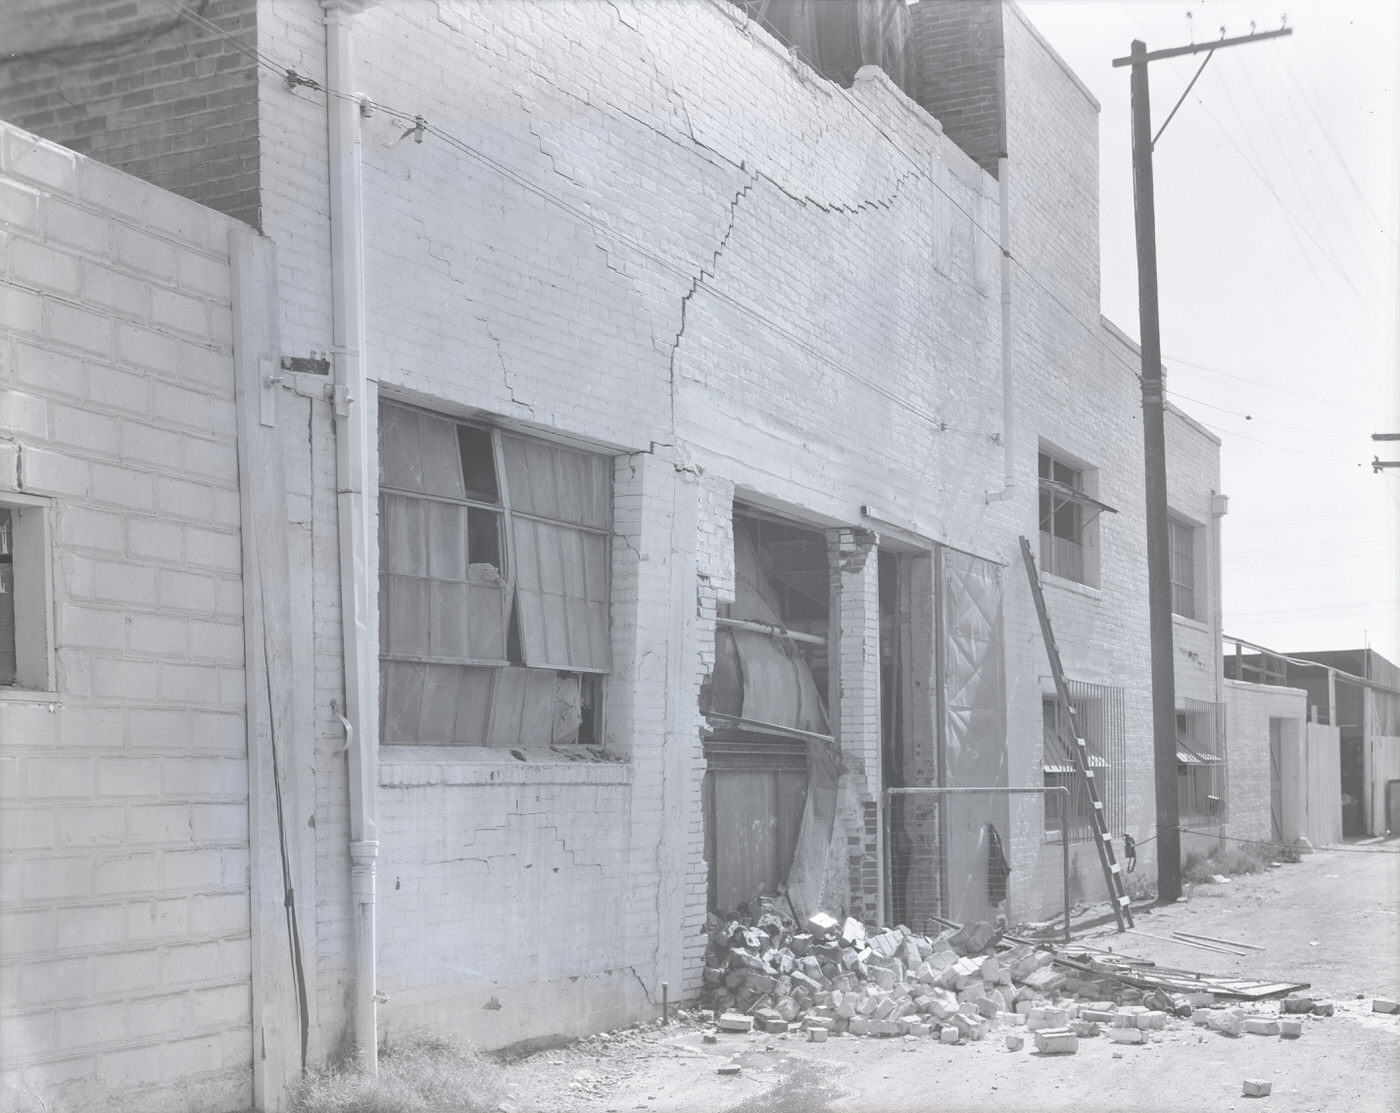 McKean's Co. Damaged Building, 1943